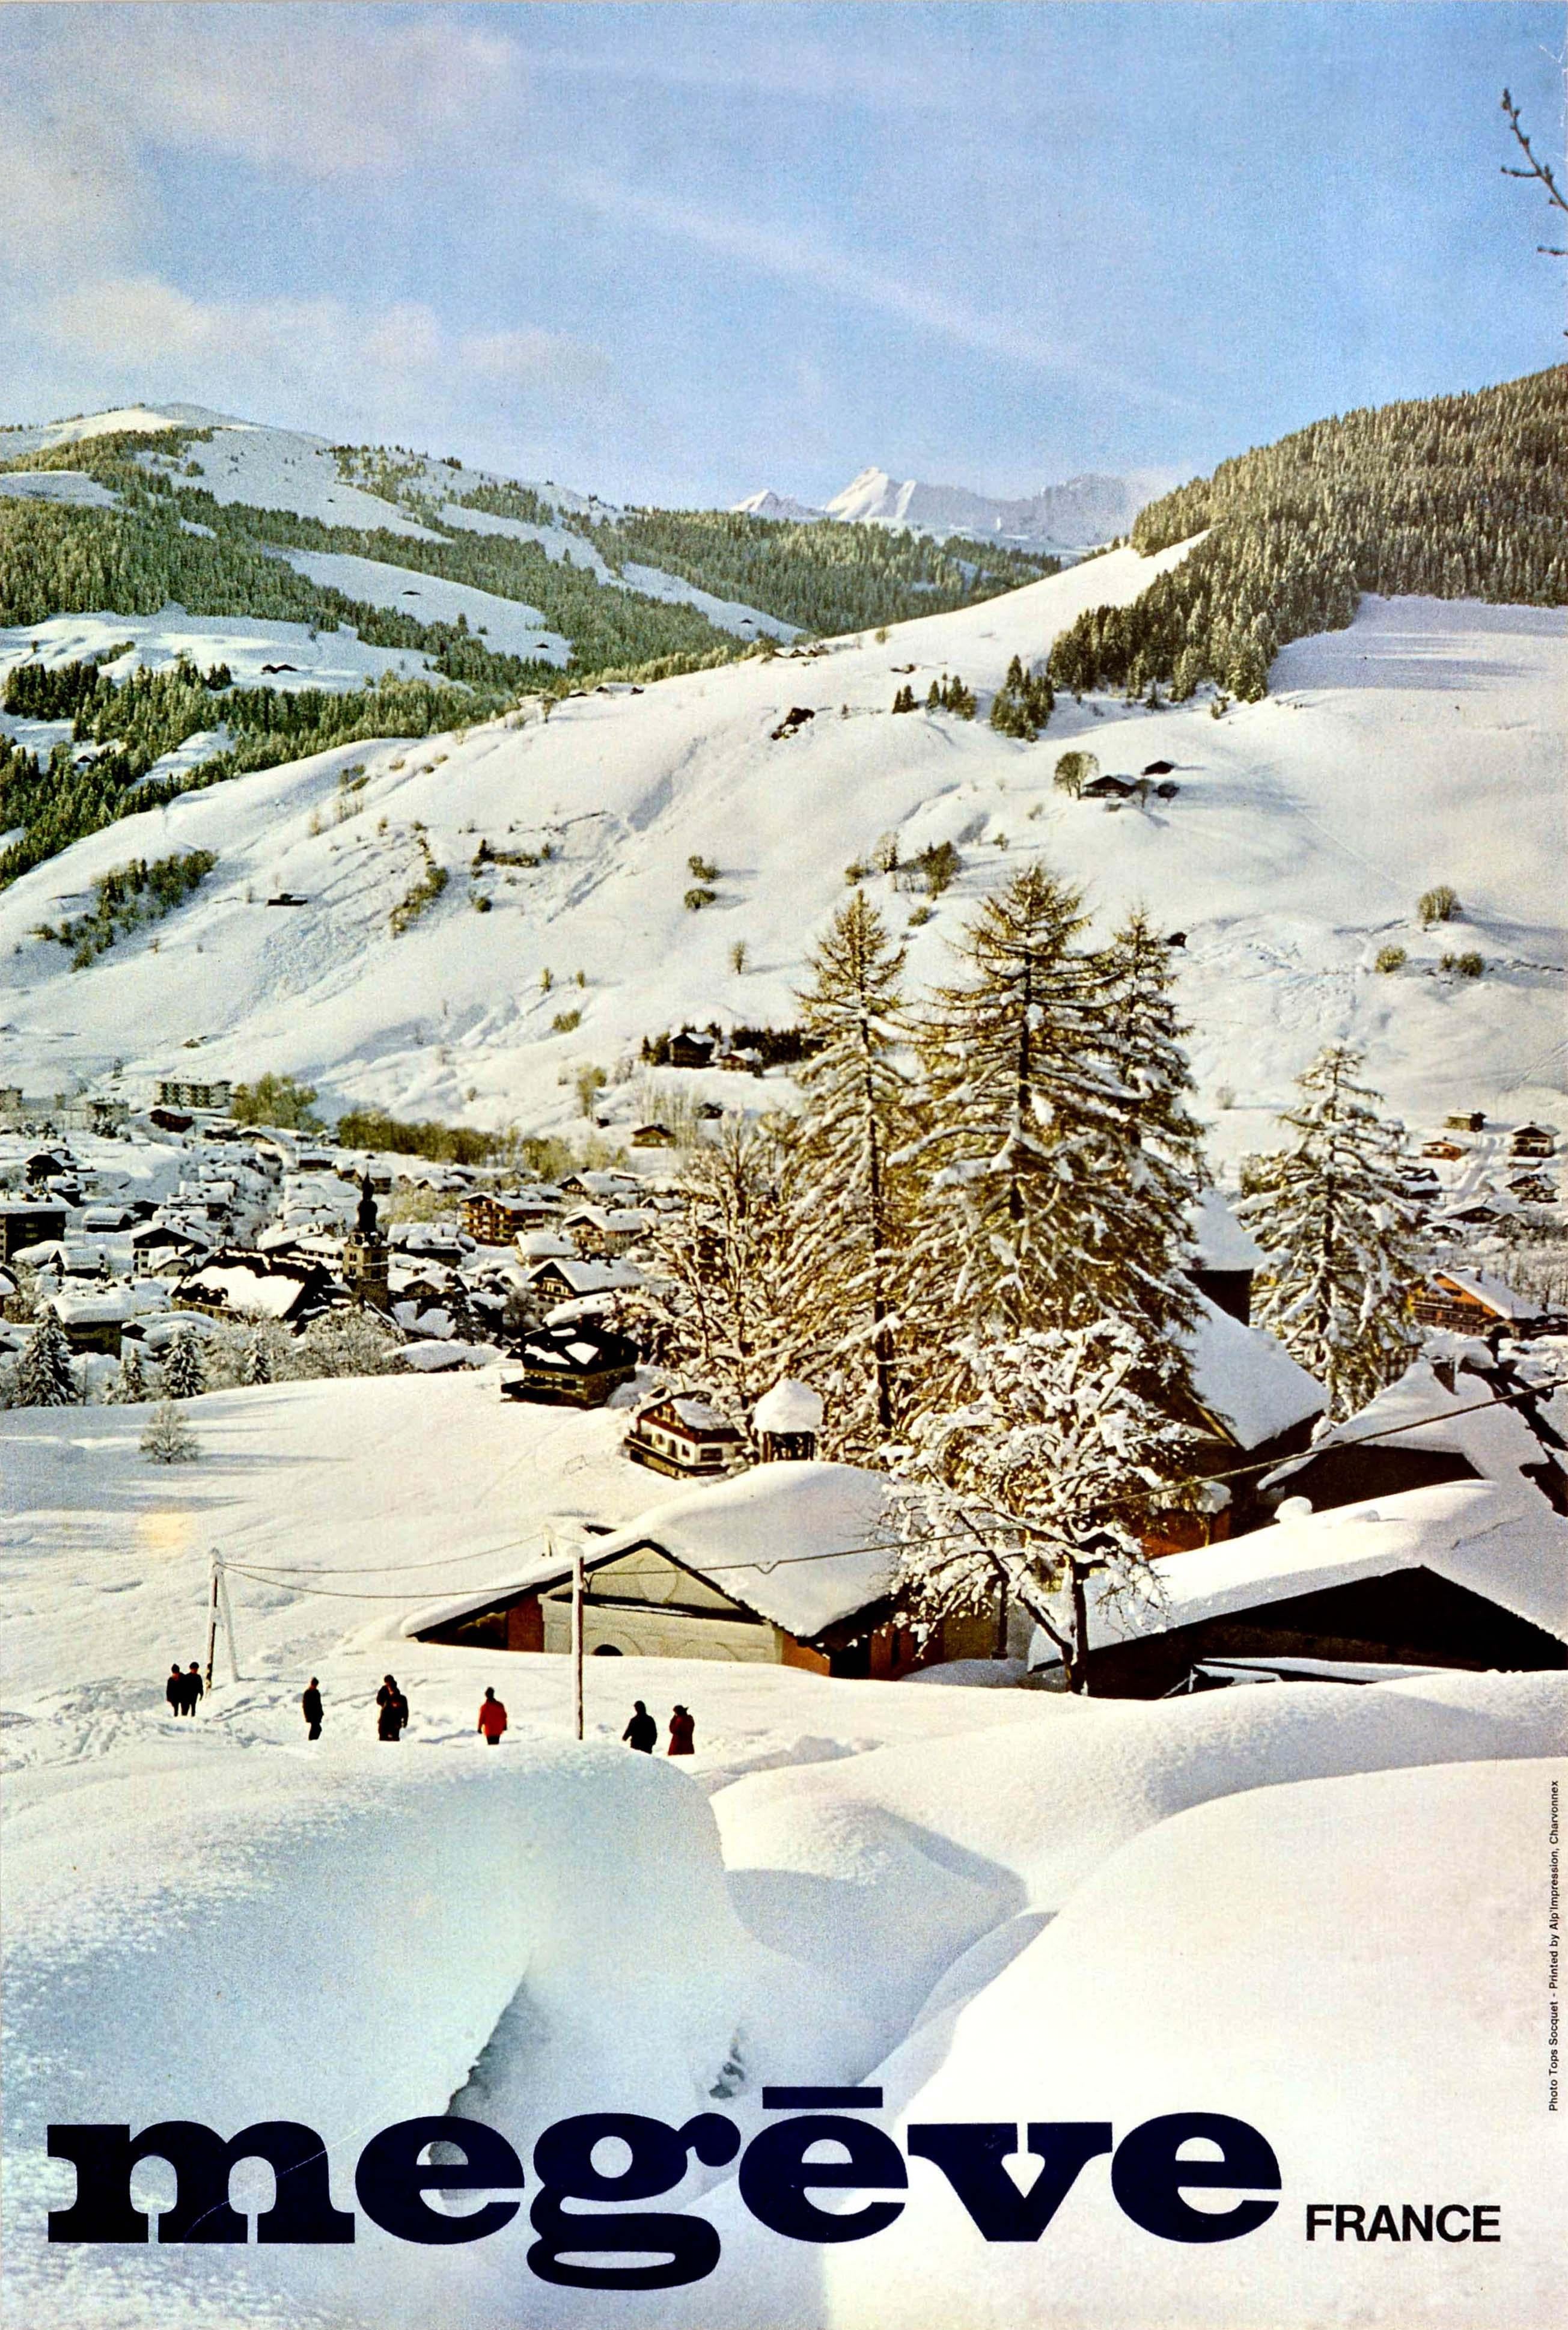 Tops Socquet Print - Original Vintage Poster Megeve France Alps Mountains Skiing Winter Sport Resort